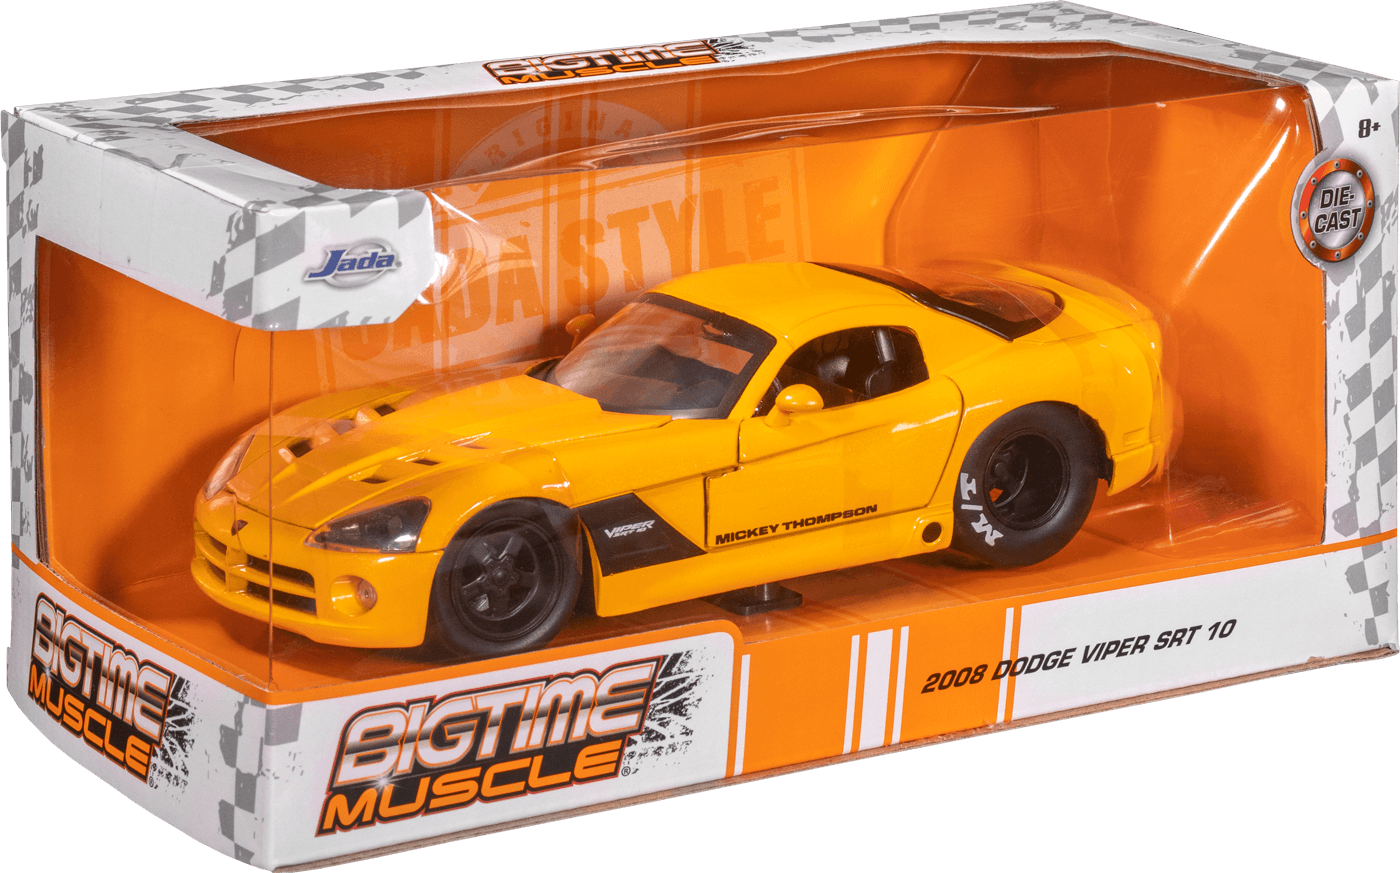 JAD33549 Big Time Muscle - 2008 Dodge Viper SRT10 1:24 Scale - Jada Toys - Titan Pop Culture